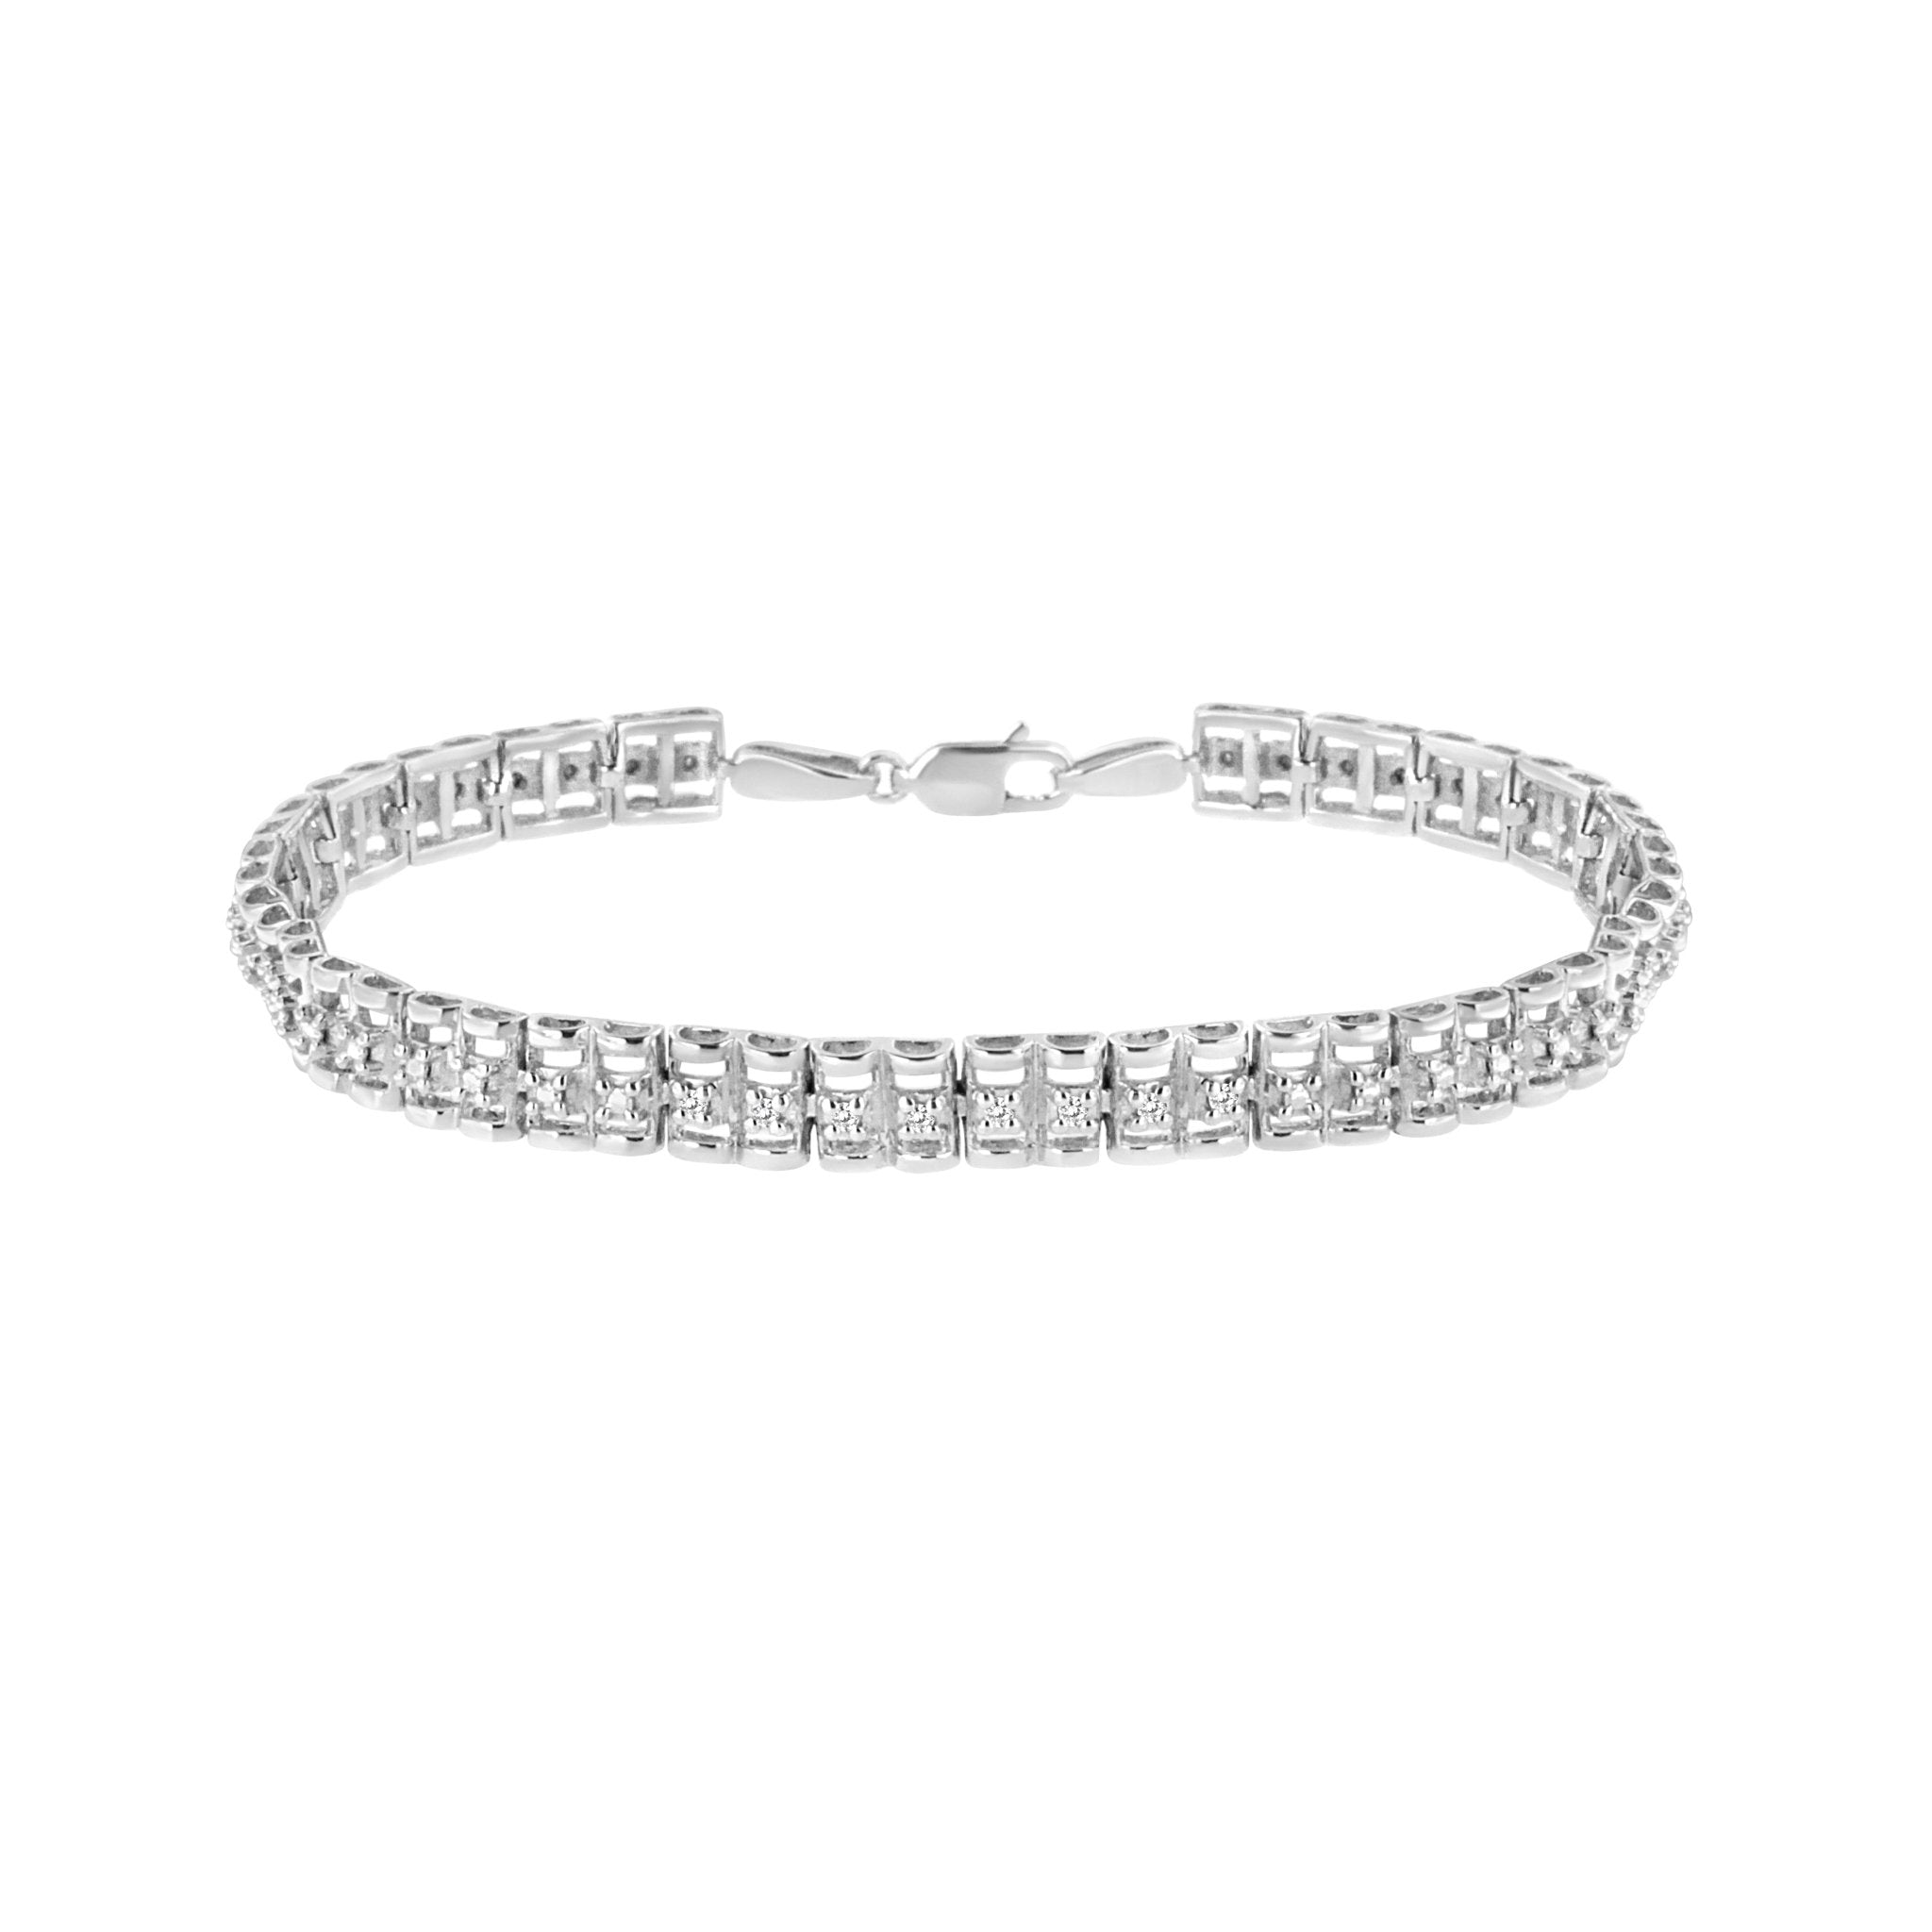 .925 Sterling Silver 1/10 Cttw Diamond Double-Link 7" Rolex Tennis Bracelet (I-J Color, I3 Clarity) - Tuesday Morning-Tennis Bracelets